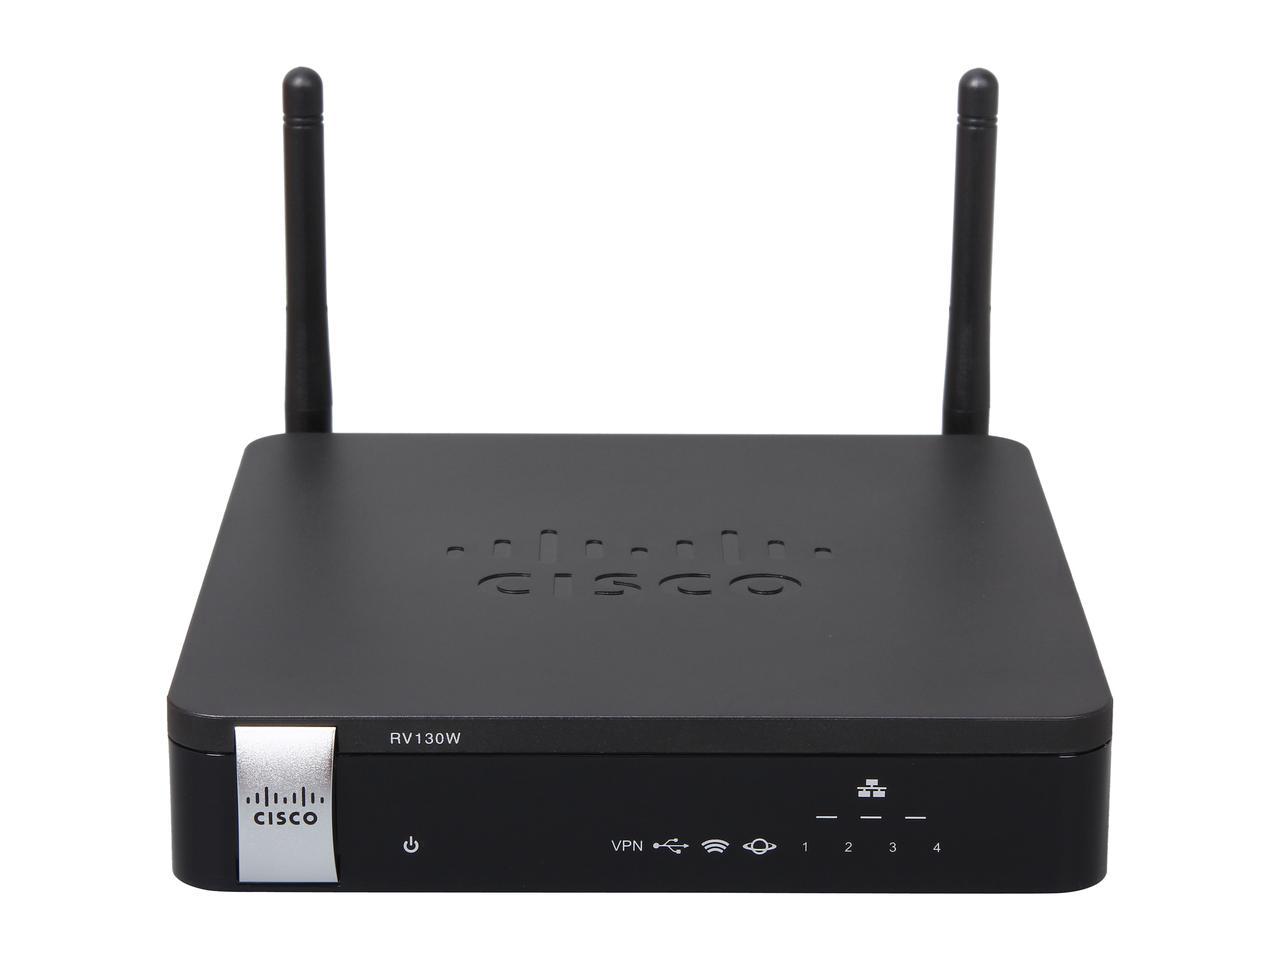 Cisco RV130W Wireless-N Multifunction VPN Router